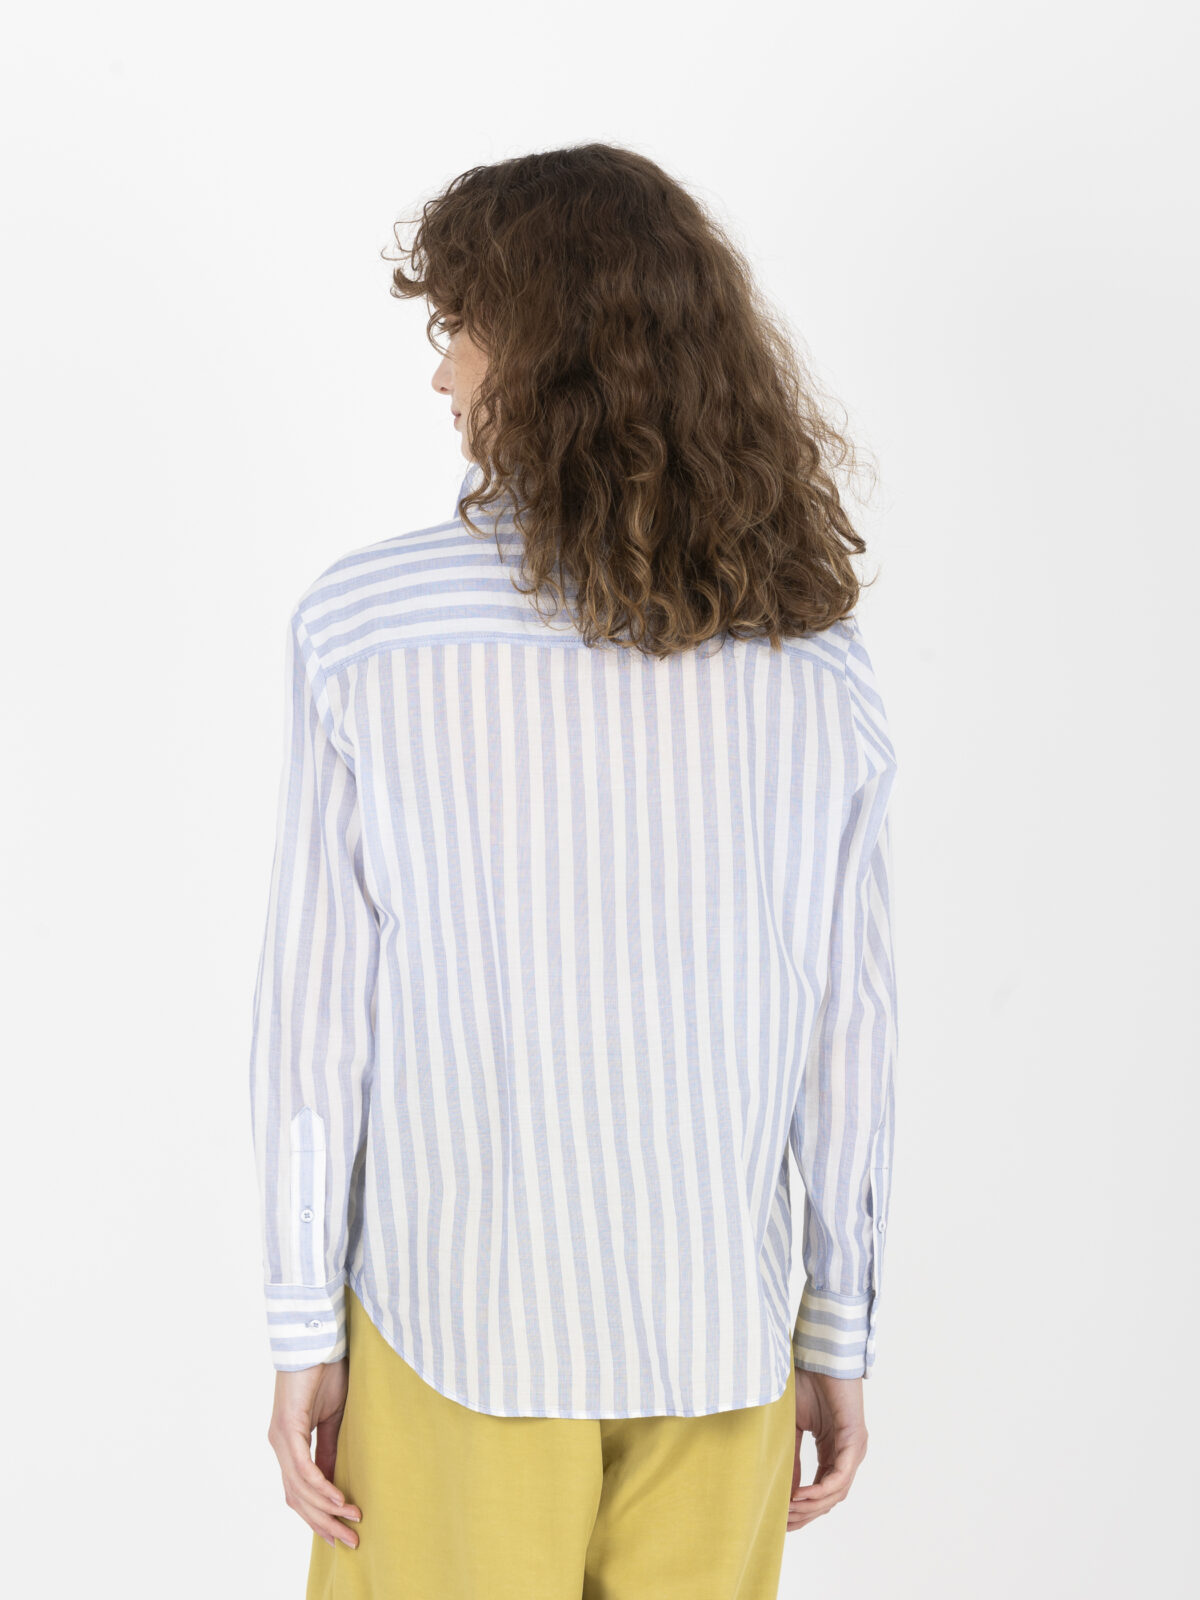 manon-blue-striped-cotton-shirt-classic-collar-sacrecoeur-matchboxathens